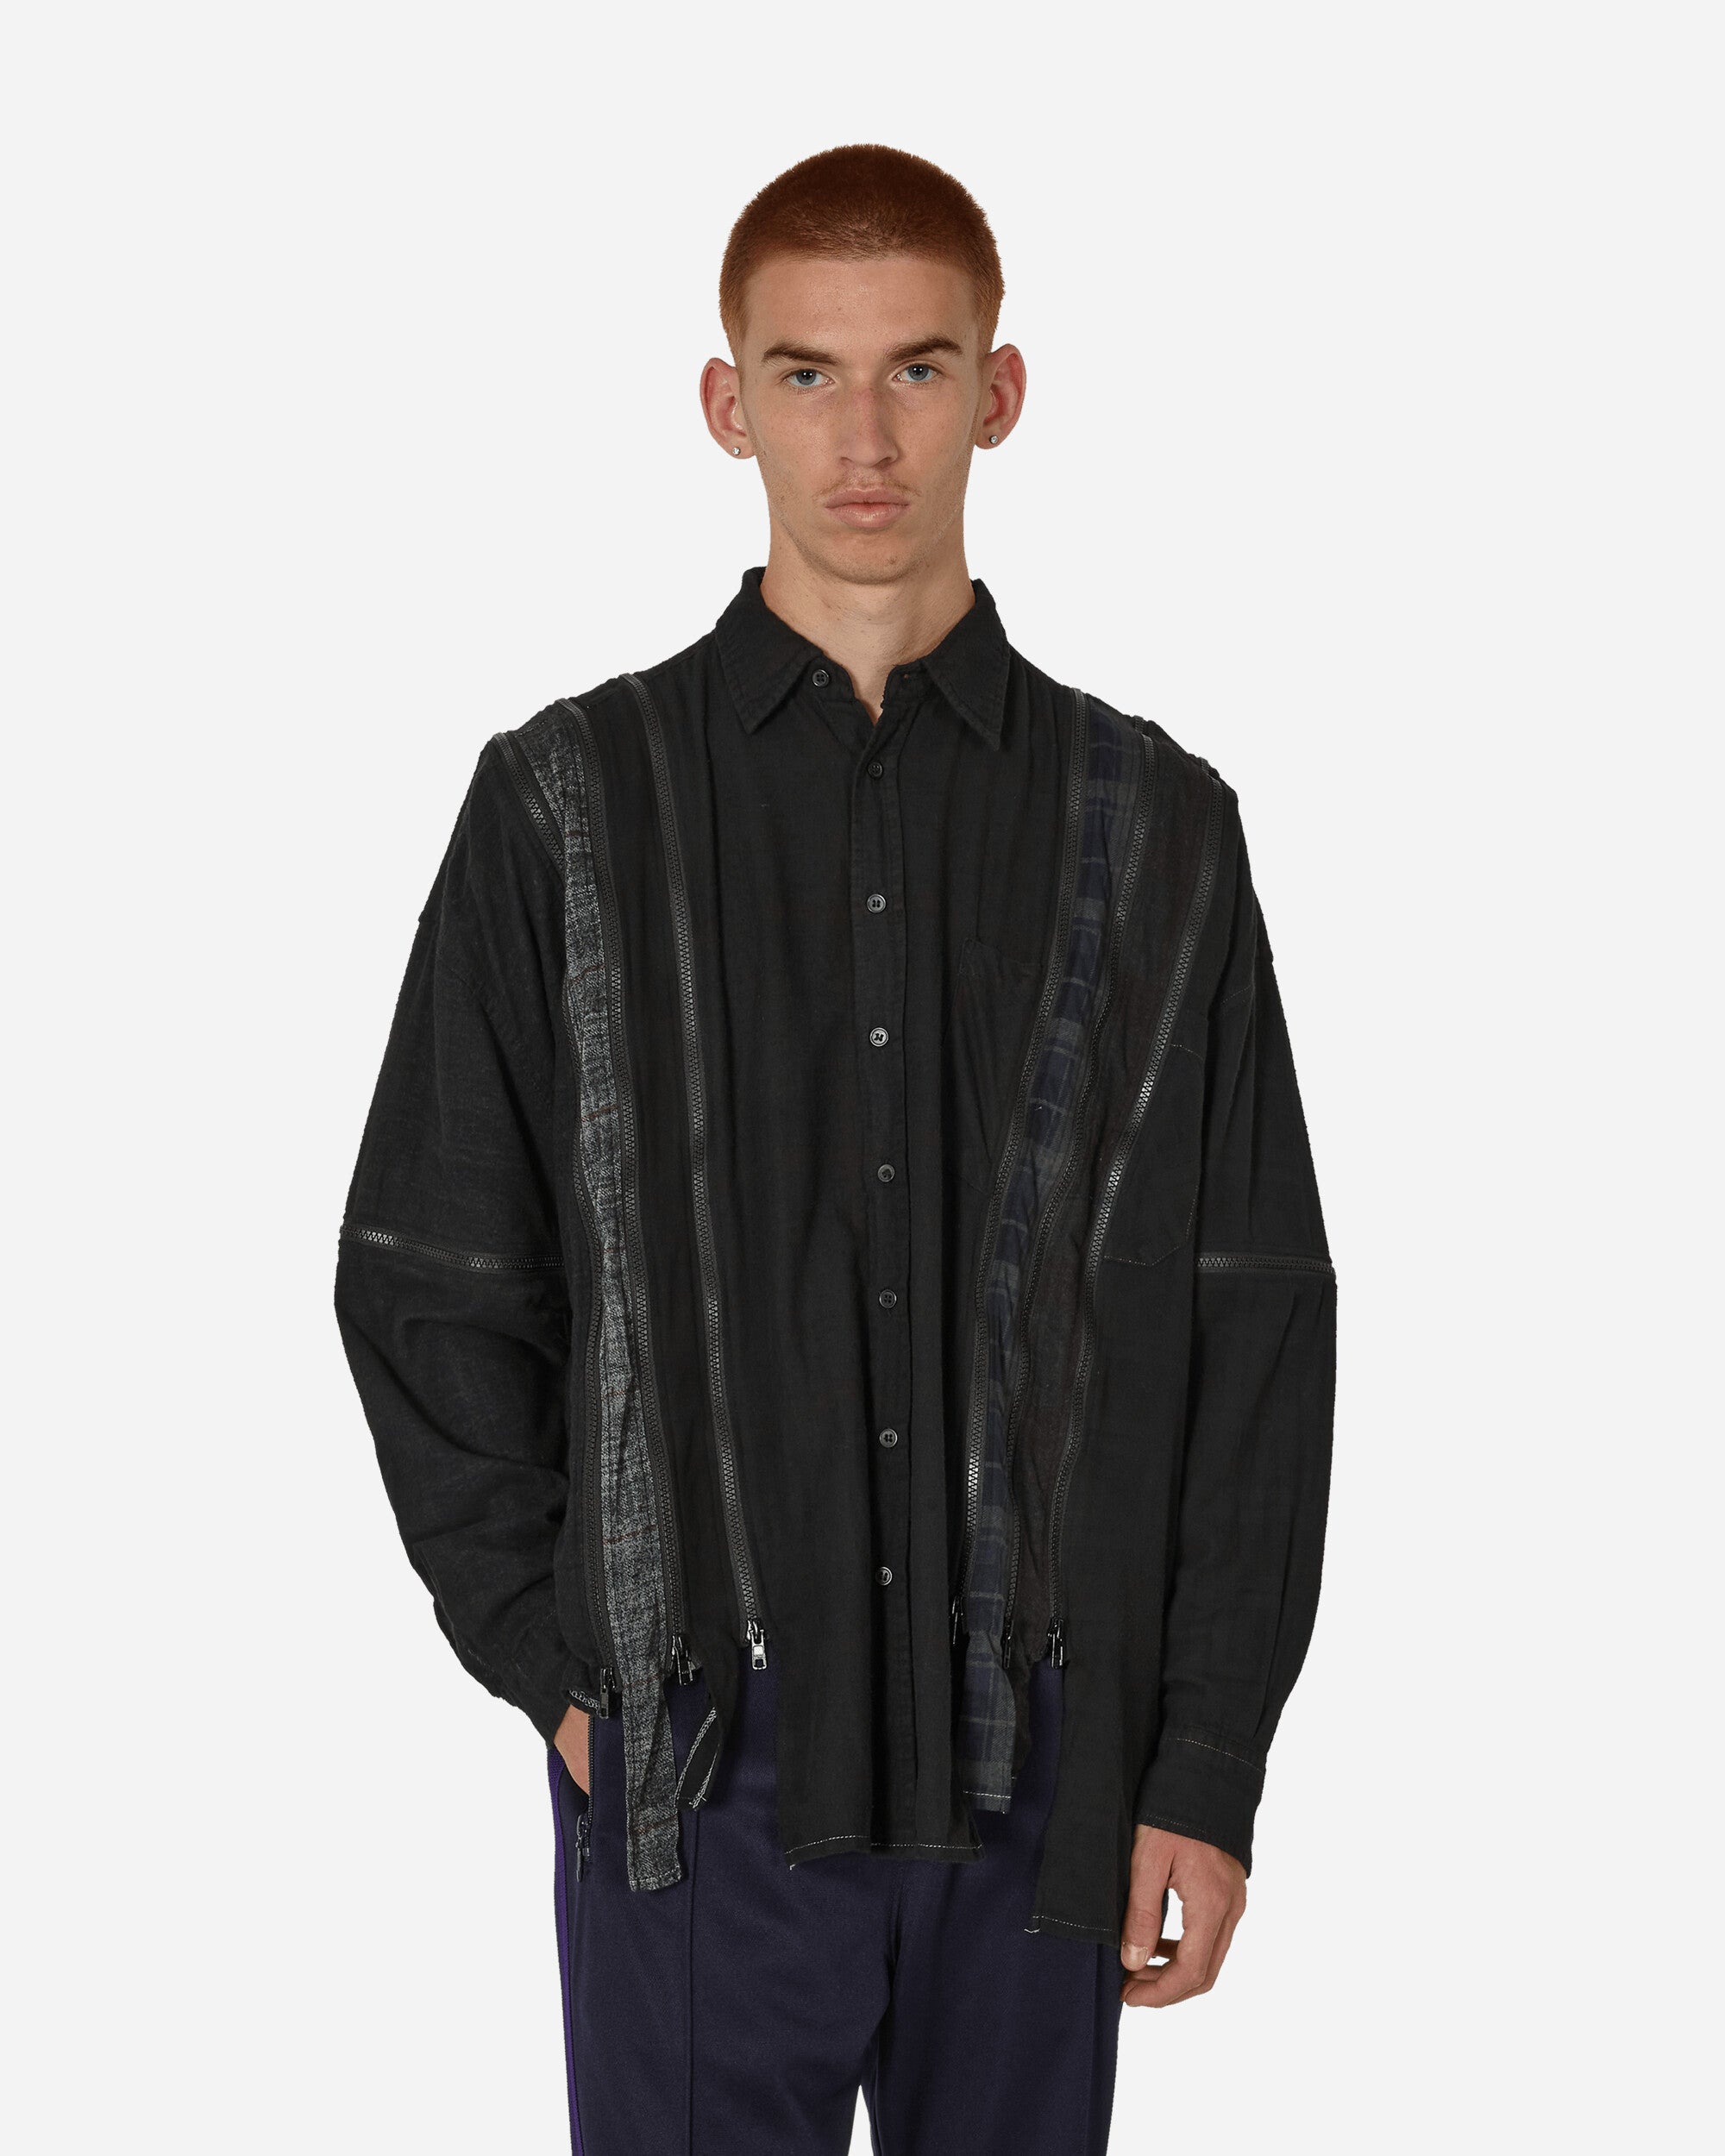 Needles Flannel Shirt -> 7 Cuts Wide Shirt / Over Dye Black Shirts Longsleeve Shirt NS301 E004